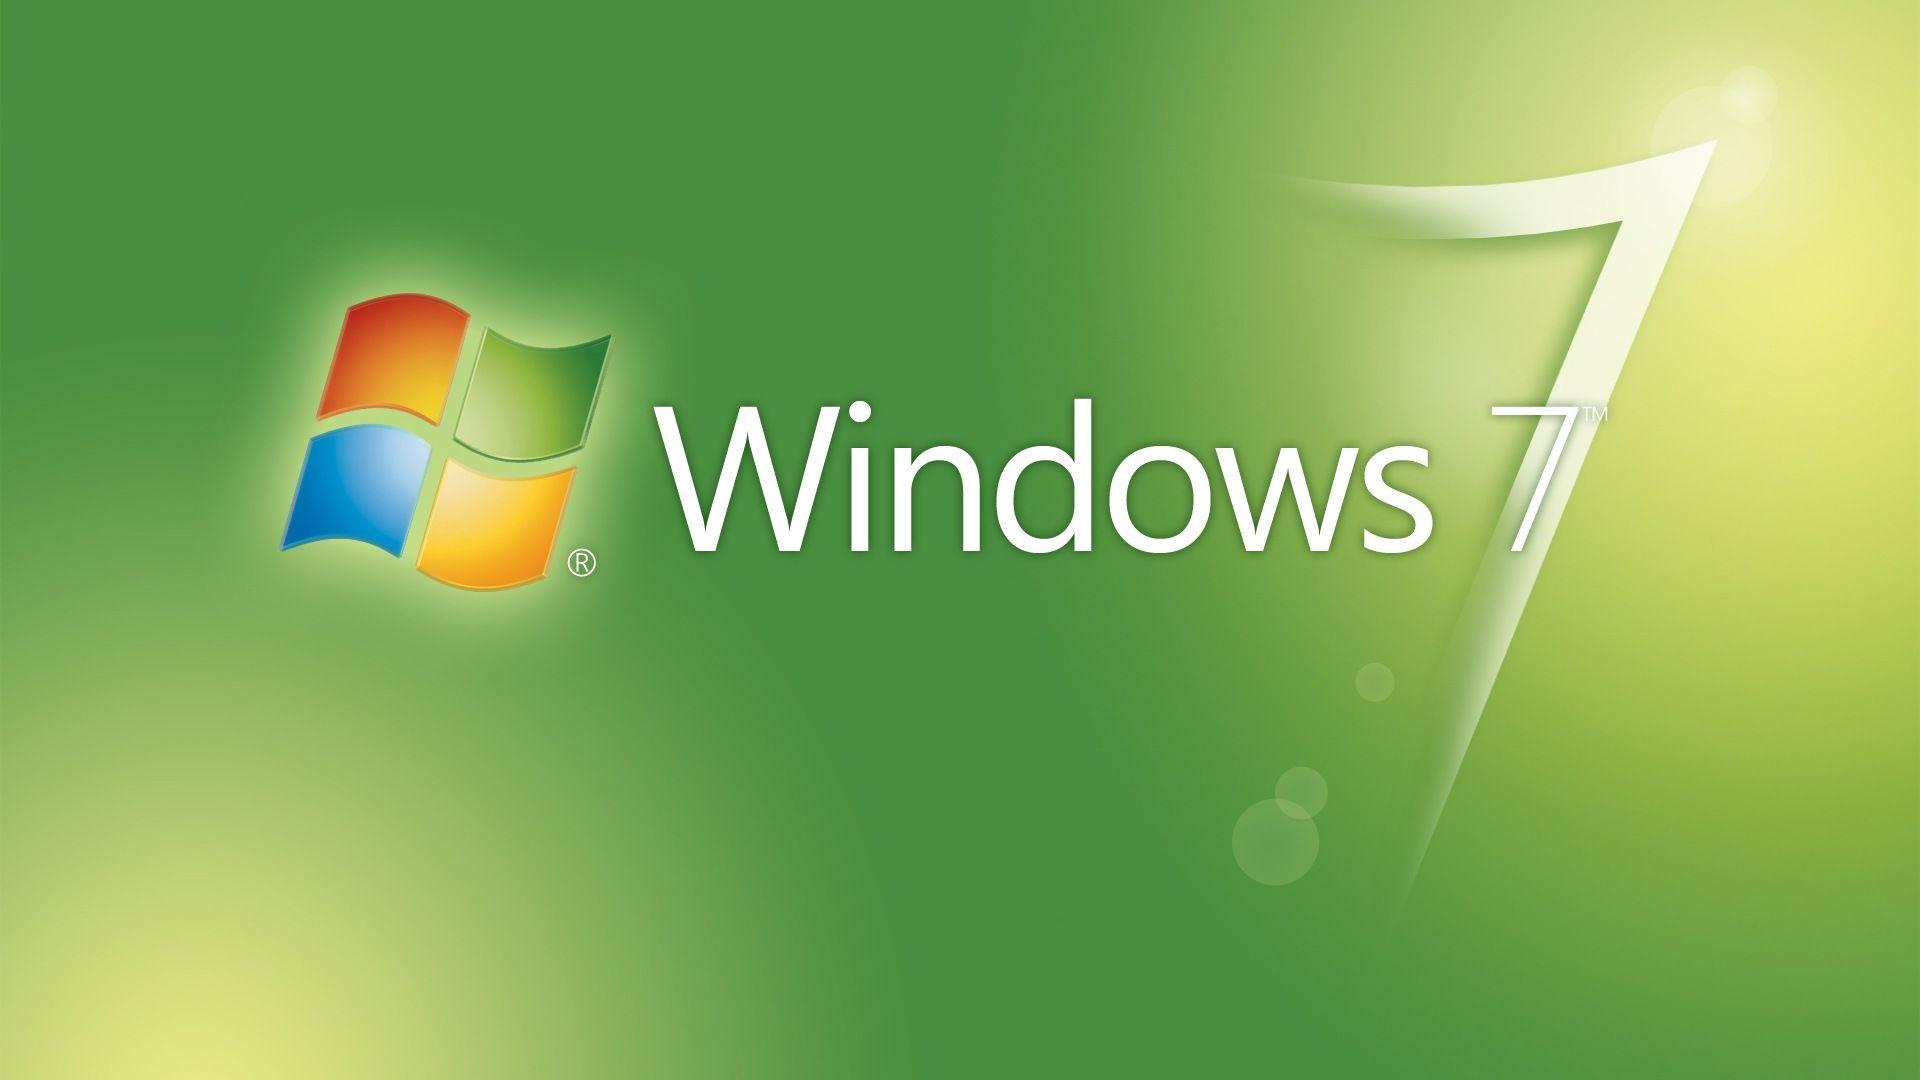 Logos For > Windows Logo Wallpapers 1920x1080